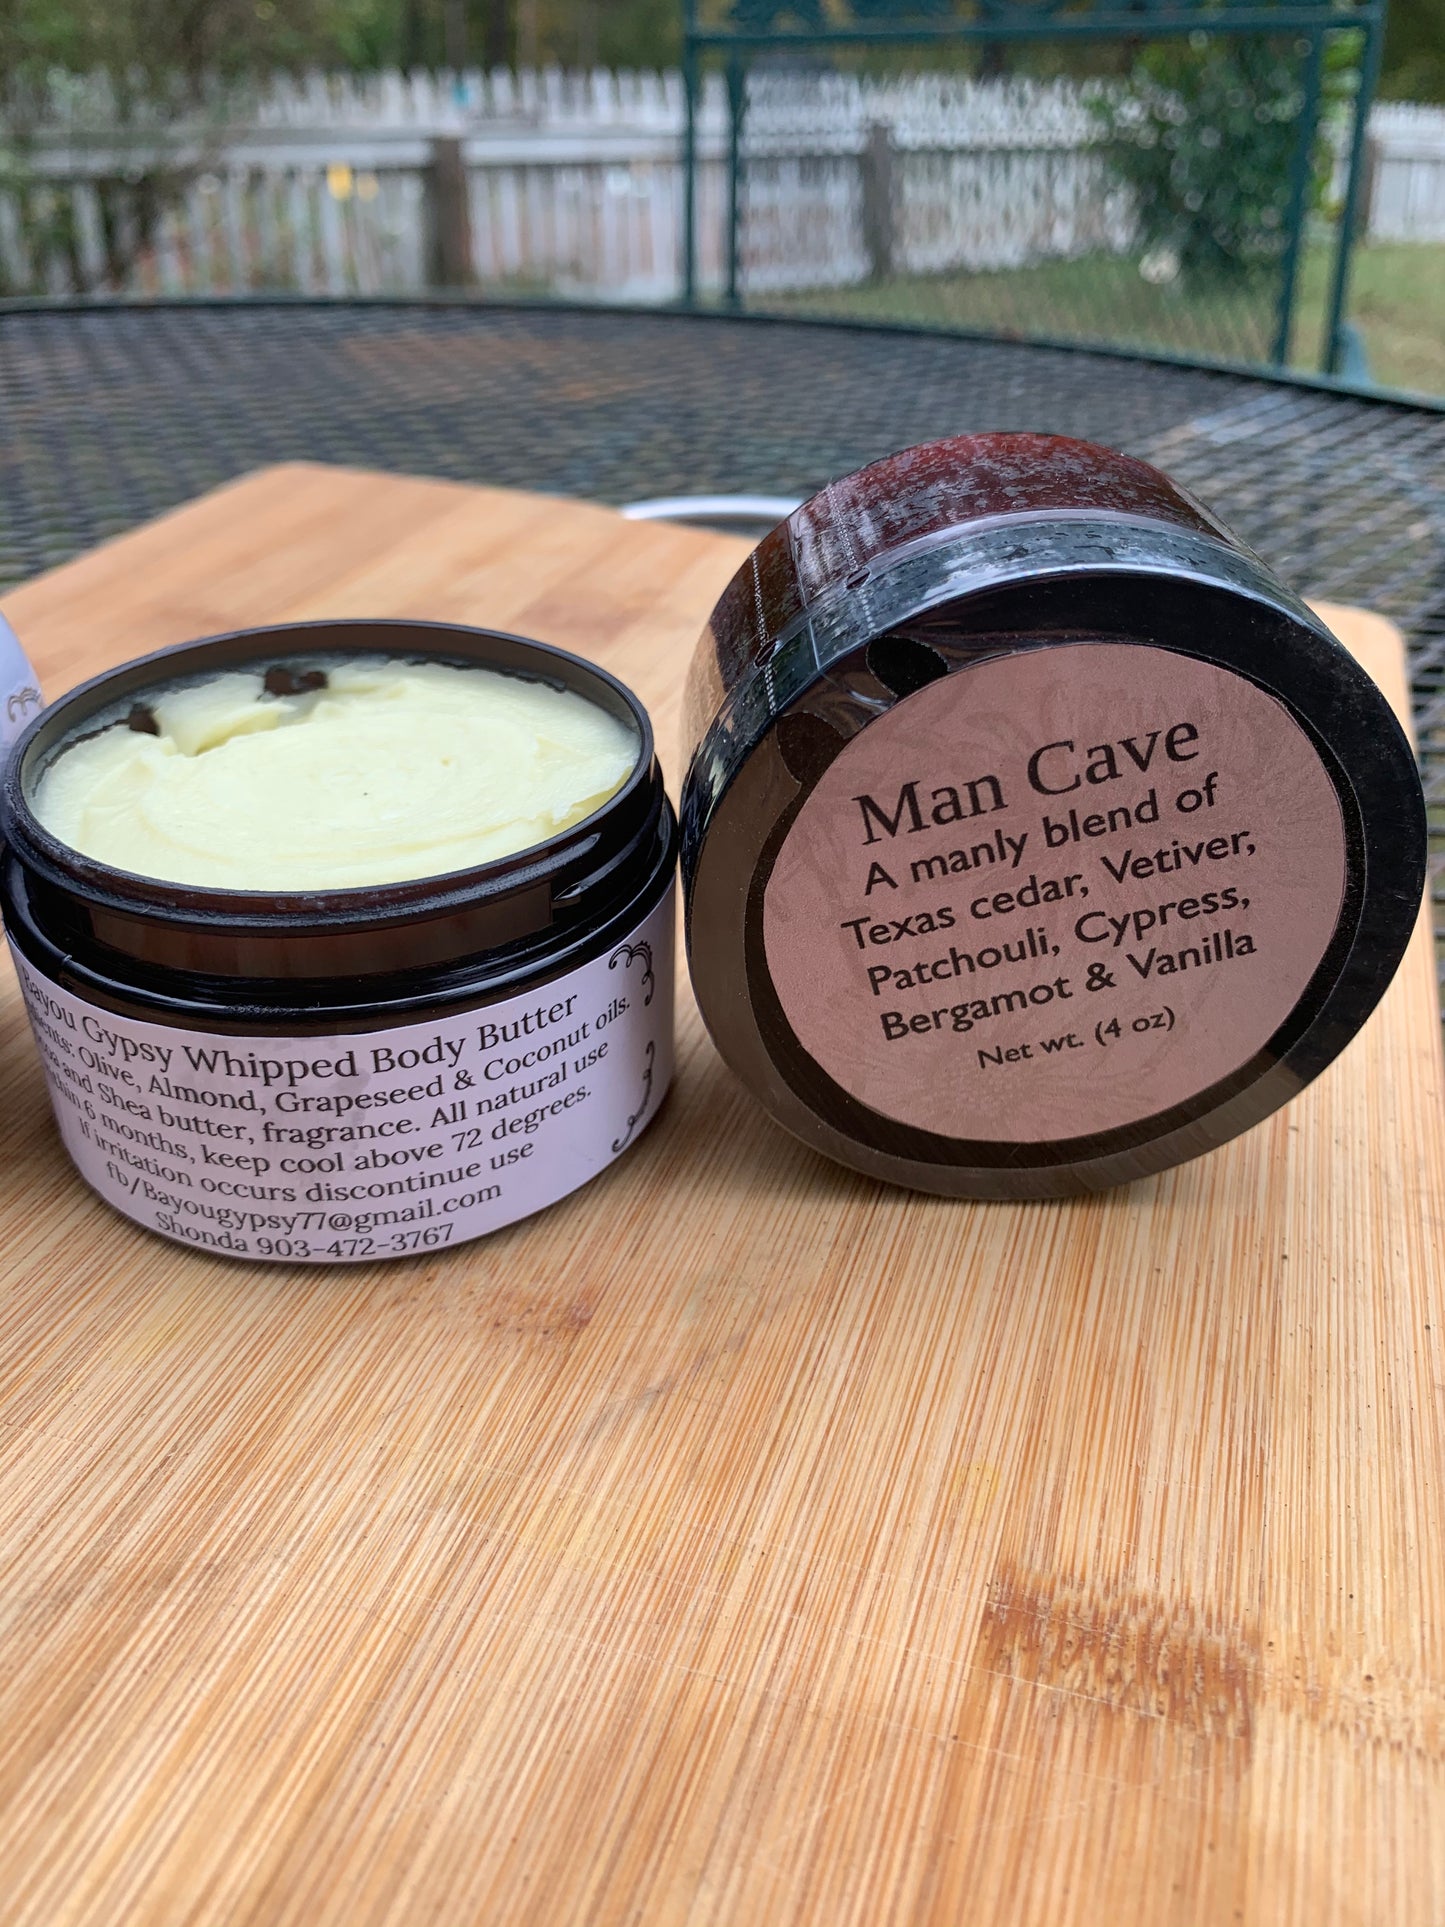 Man Cave body butter